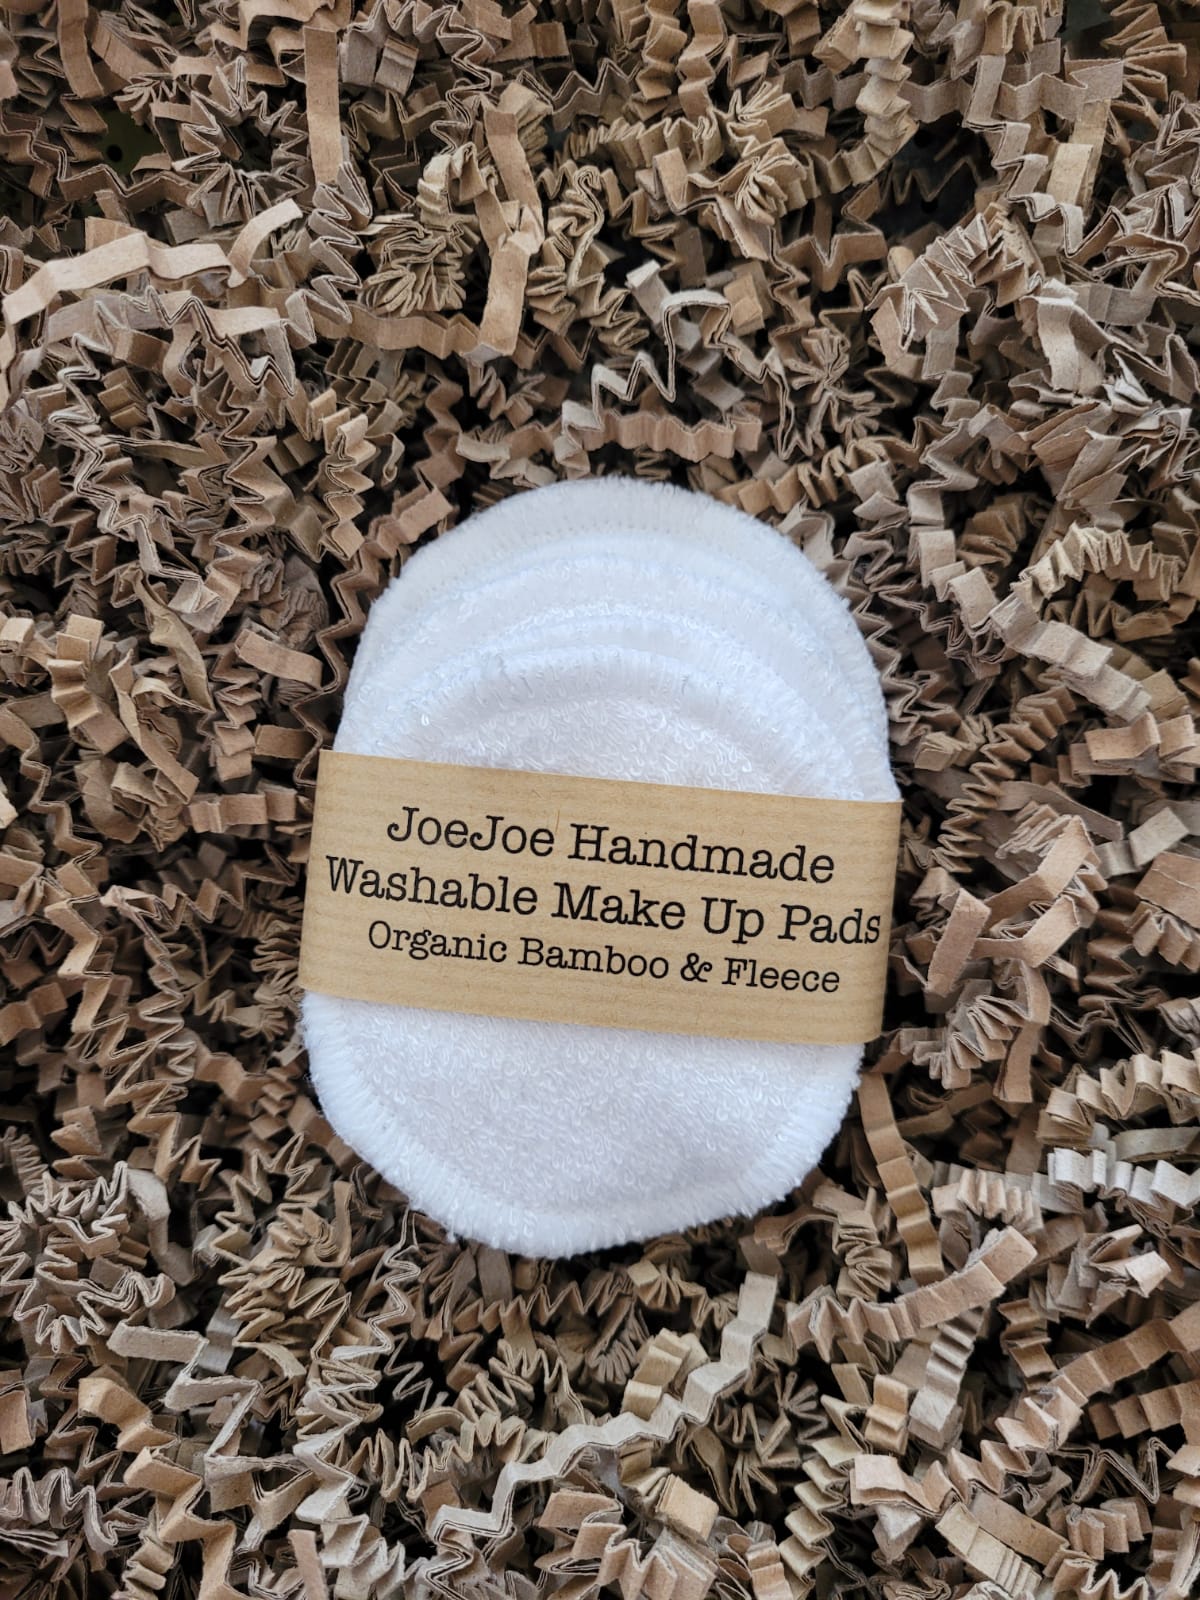 Handmade Washable Make Up Pads